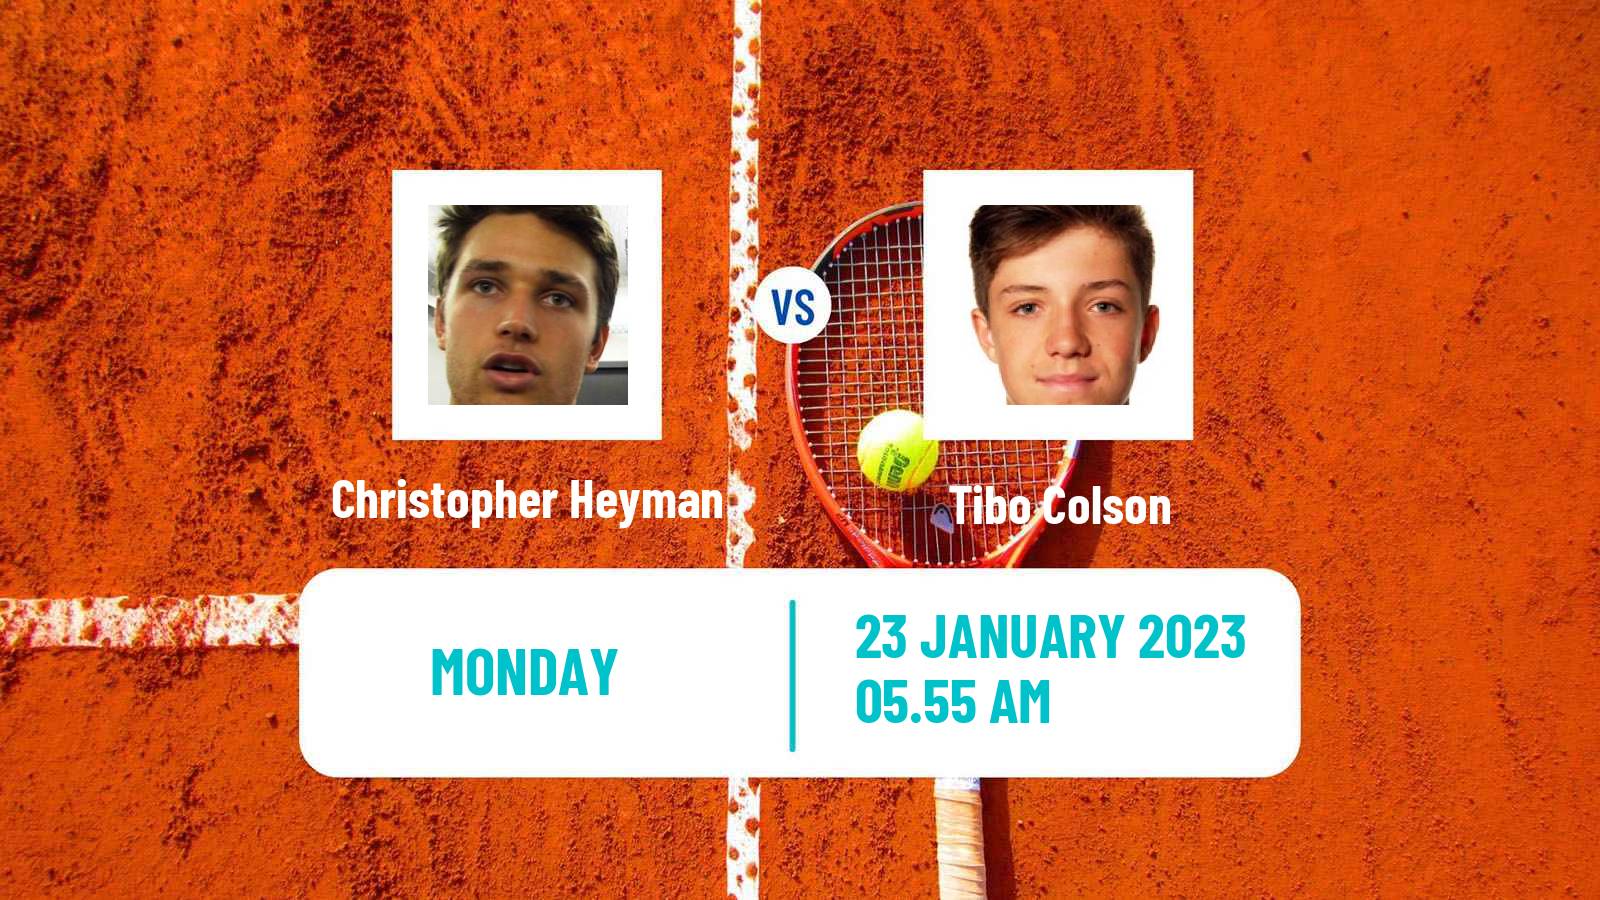 Tennis ATP Challenger Christopher Heyman - Tibo Colson